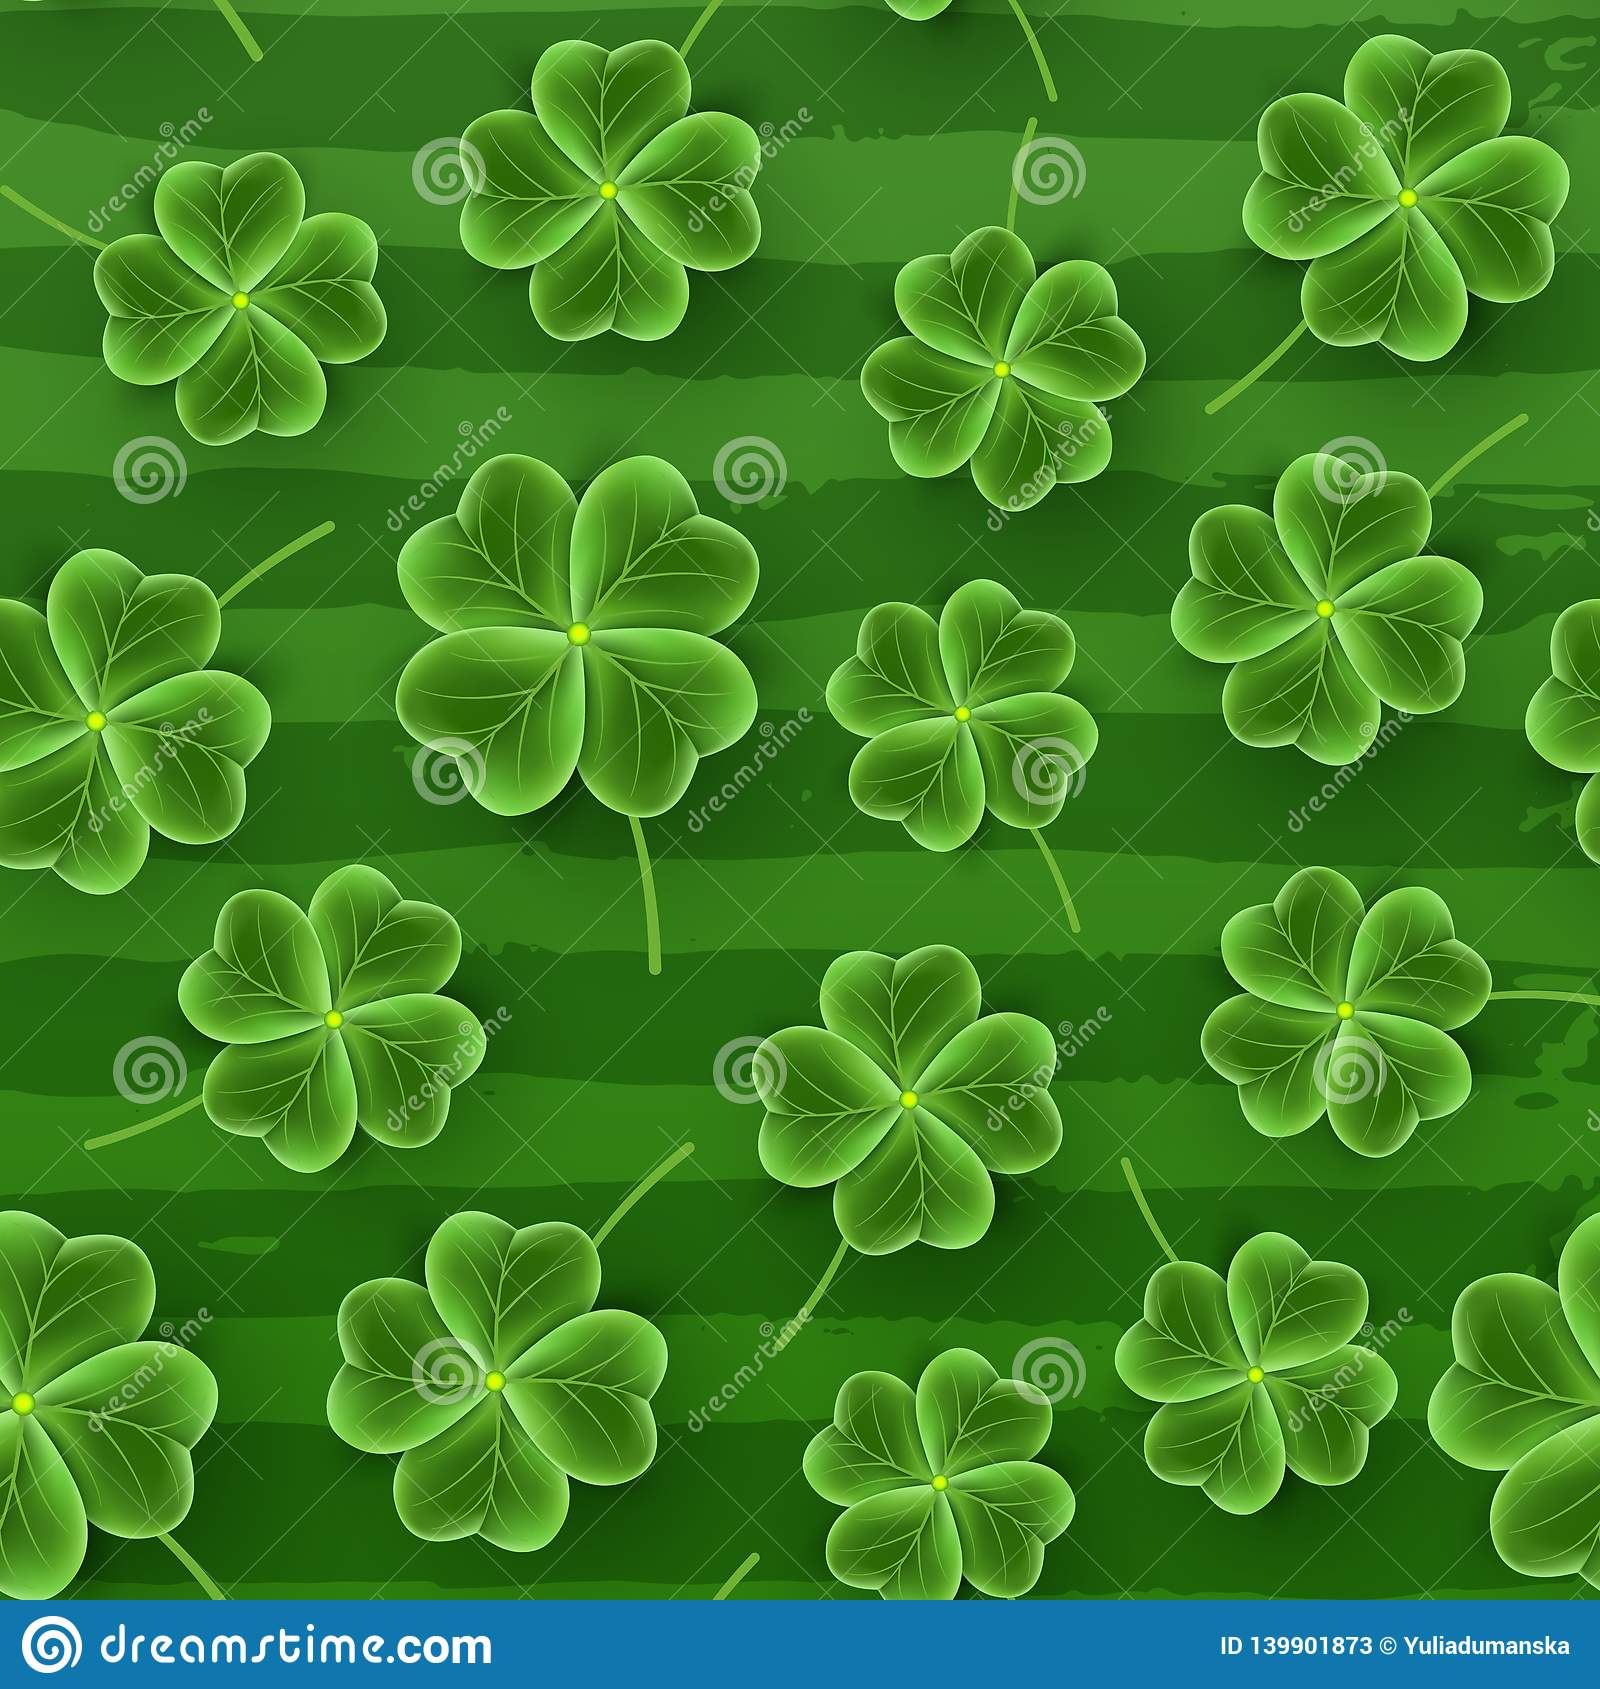 San patricks day pattern of realistic clover leaves green shamrock grass wallpaper joy flower for irish beer festival stock vector